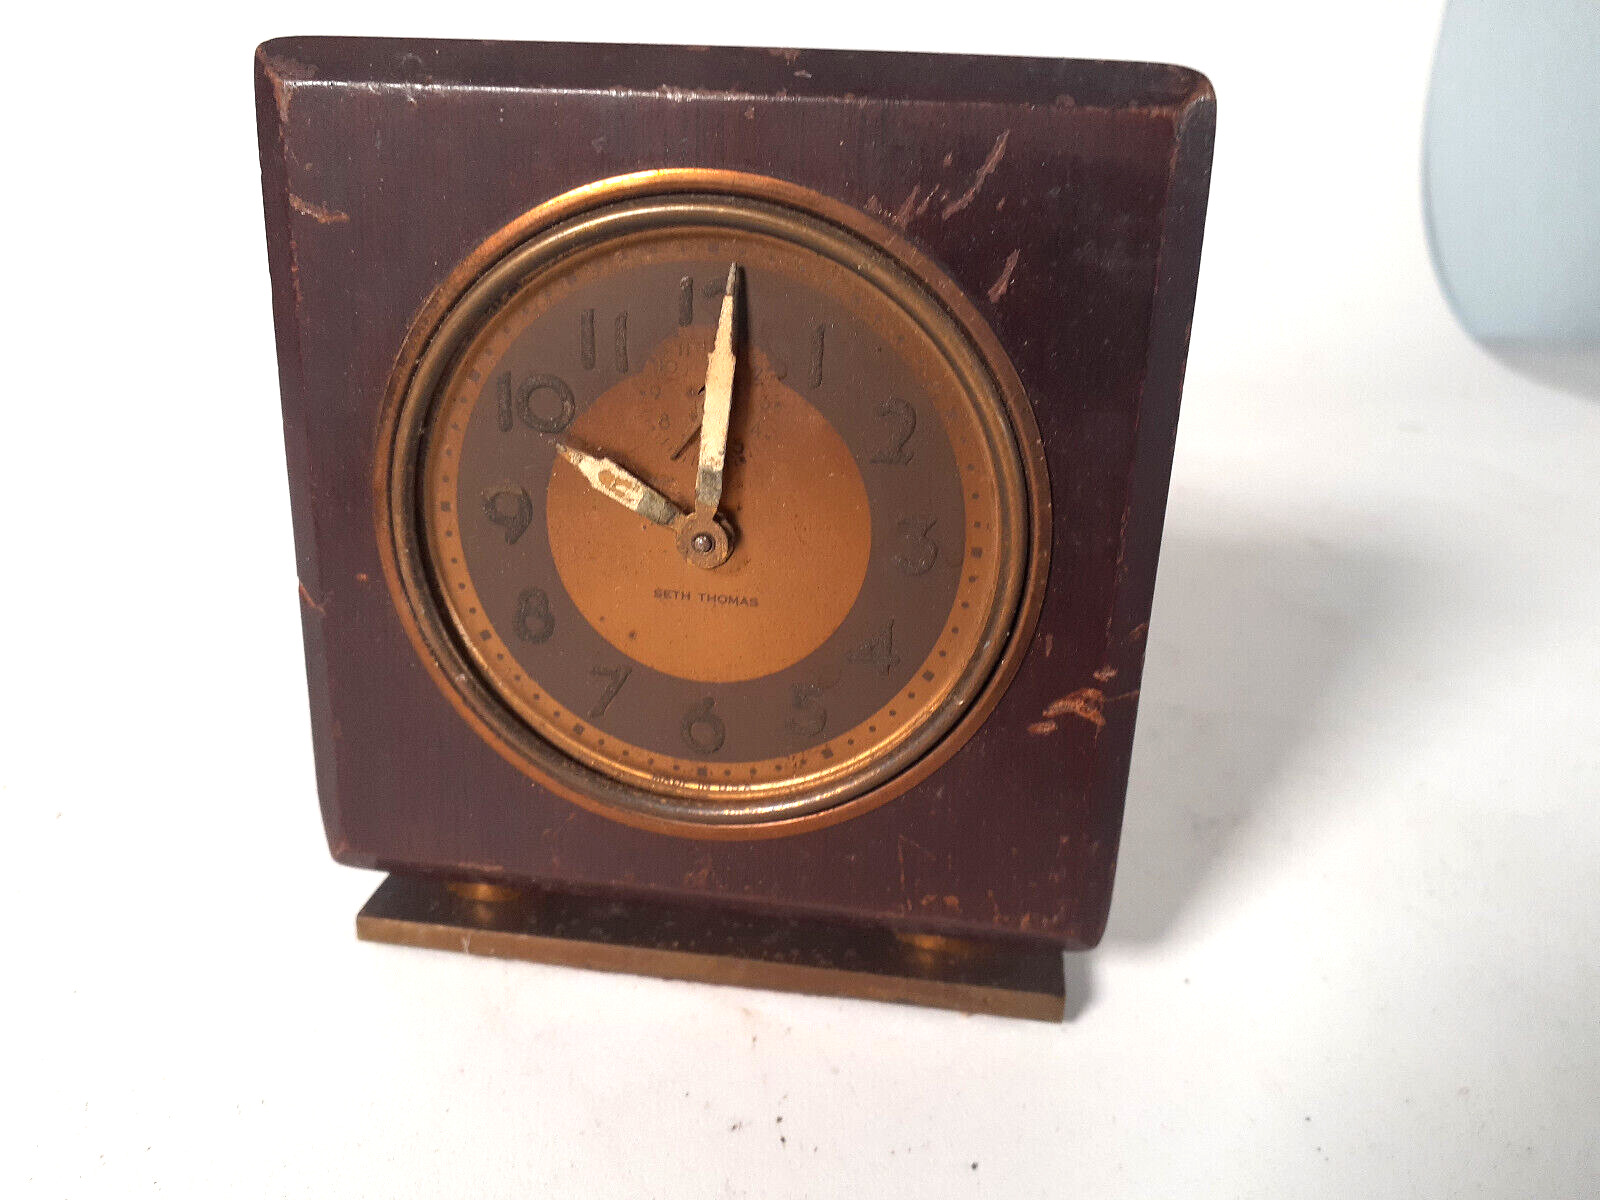 Vintage 1930s Seth Thomas Alarm Clock, Art Deco, Wood Case, Not Running, Aoo6